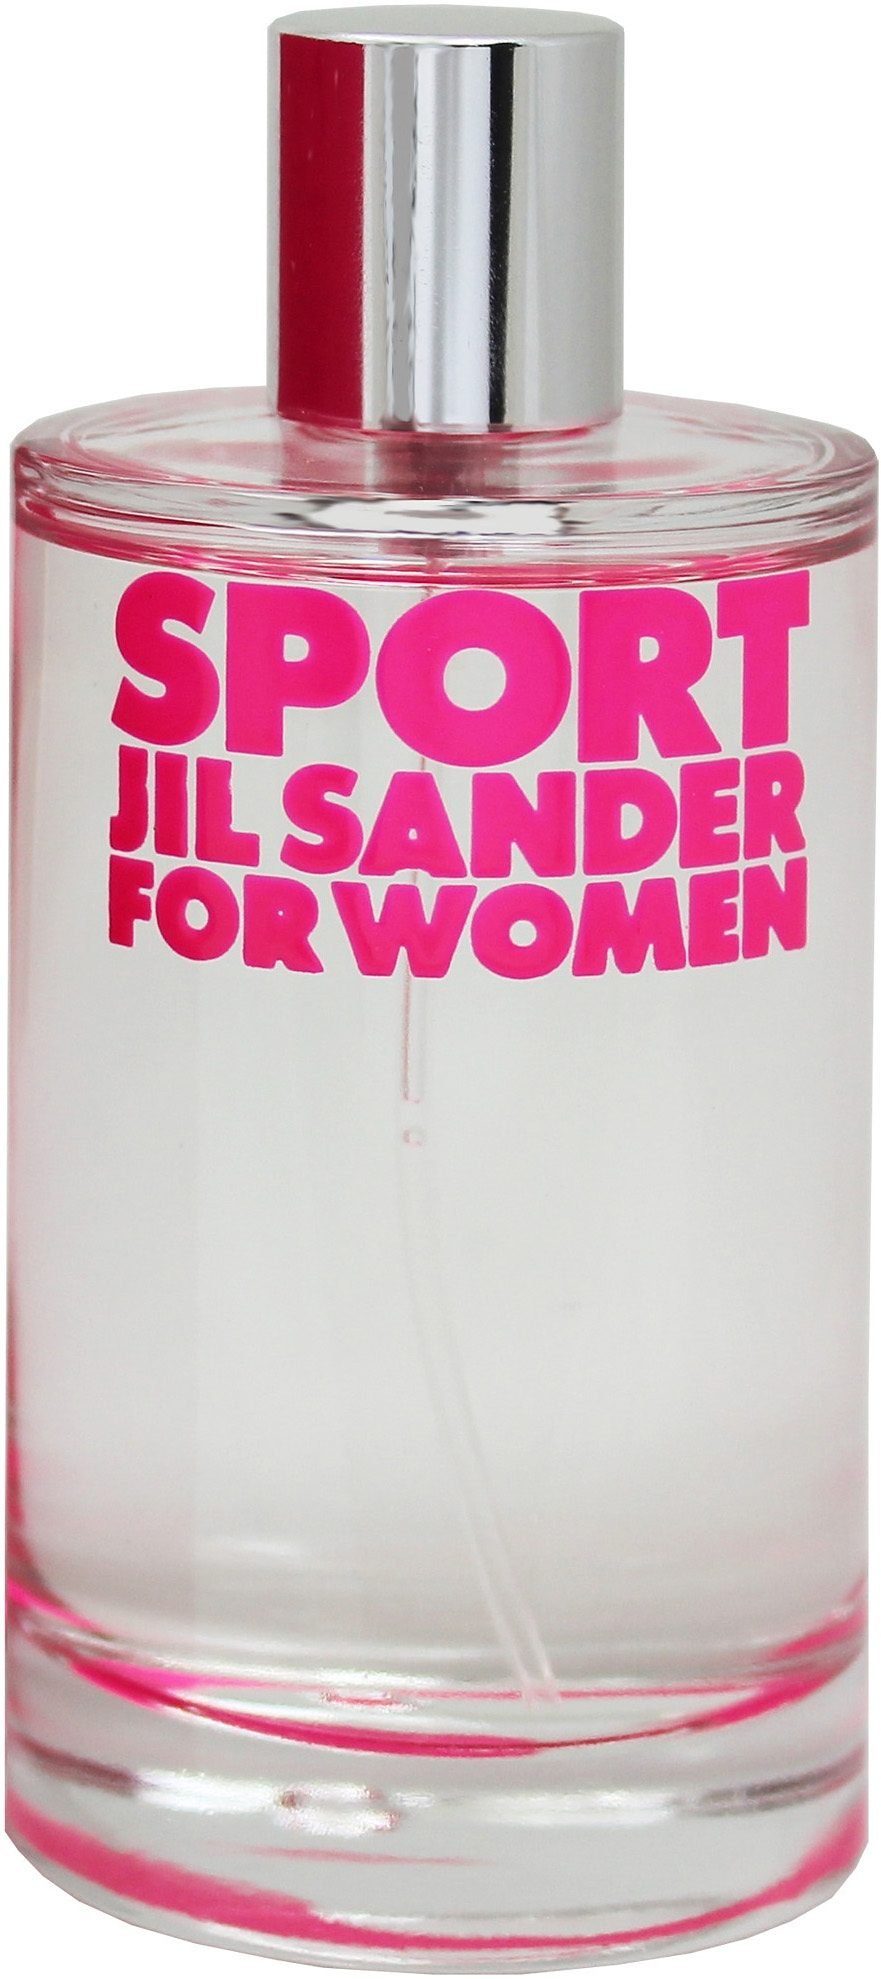 JIL SANDER Eau de Toilette Sport for Woman